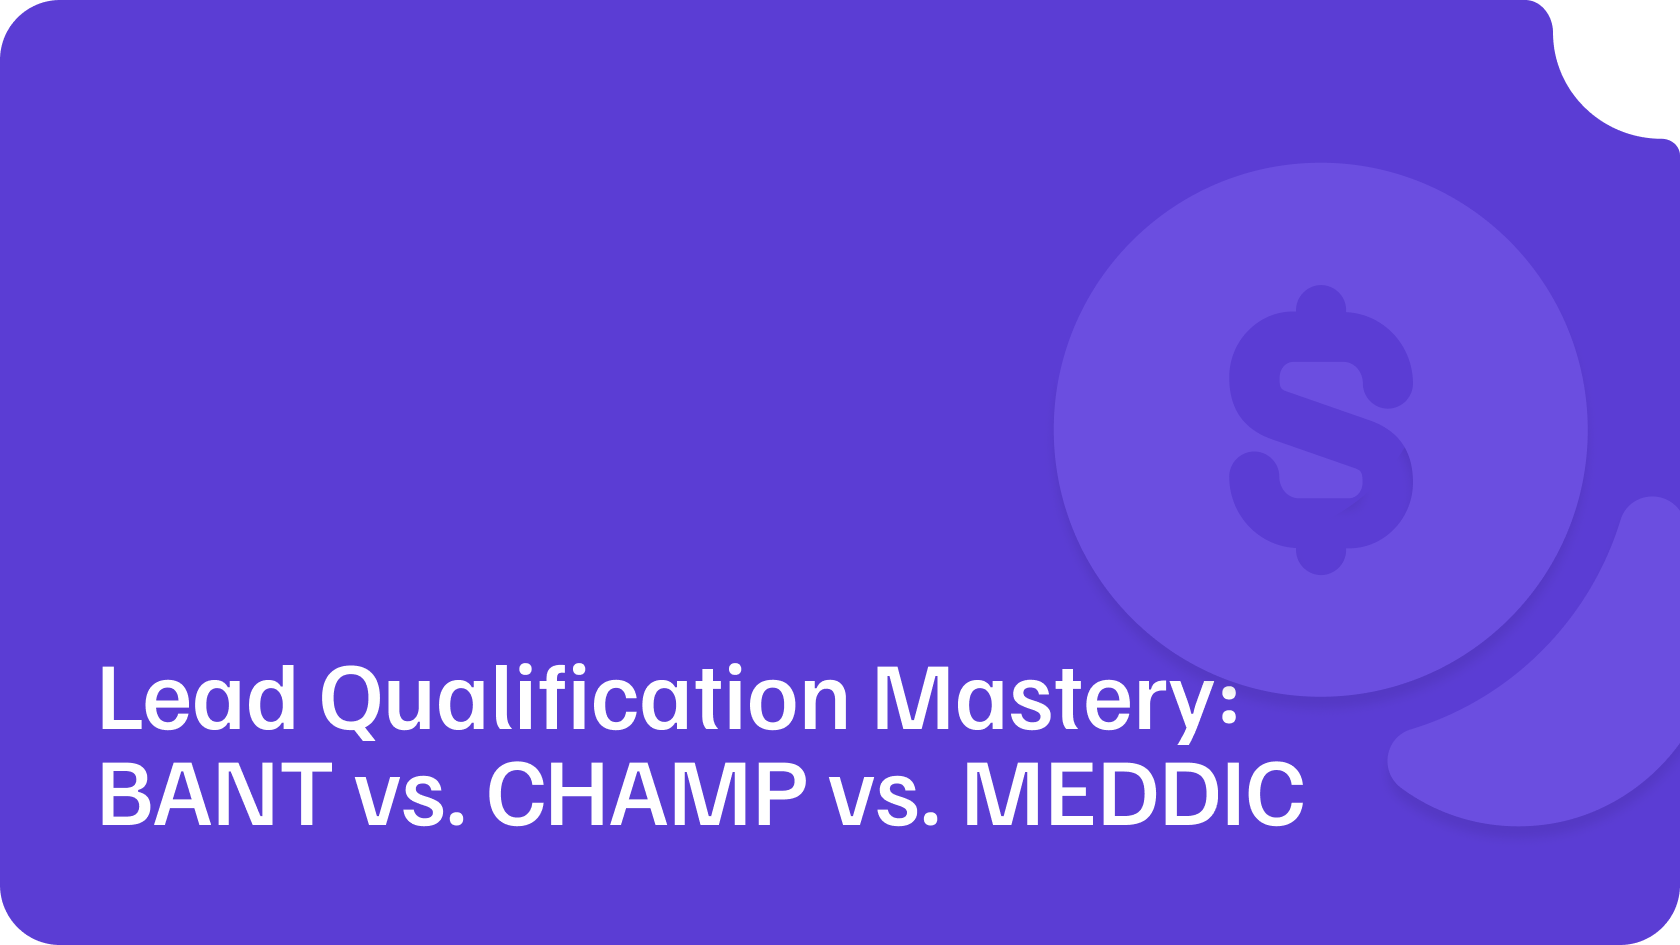 Lead Qualification Mastery: BANT vs. CHAMP vs. MEDDIC